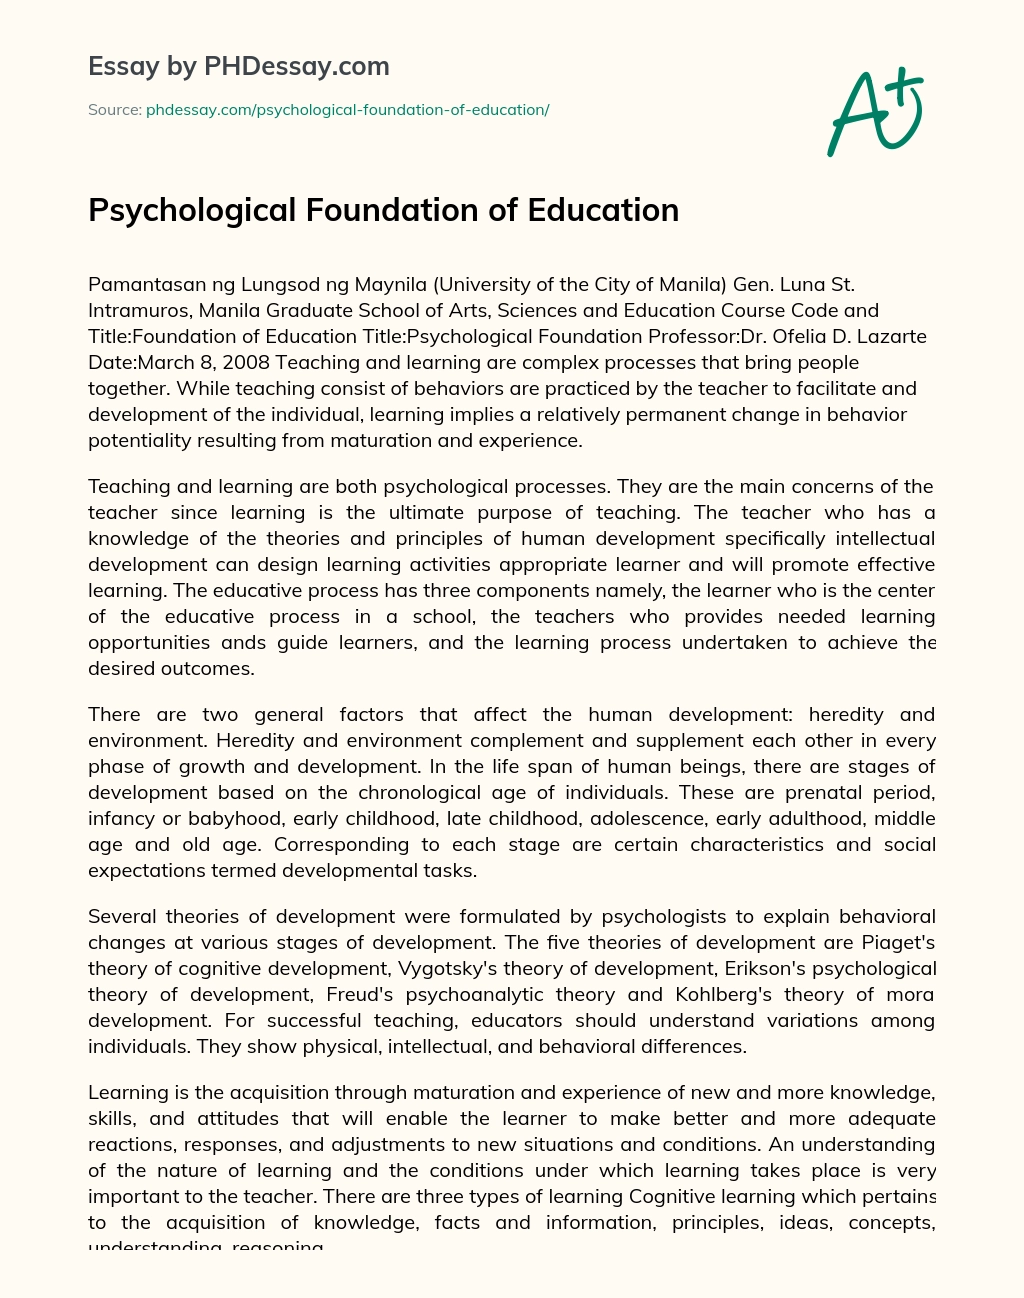 Psychological Foundation of Education essay